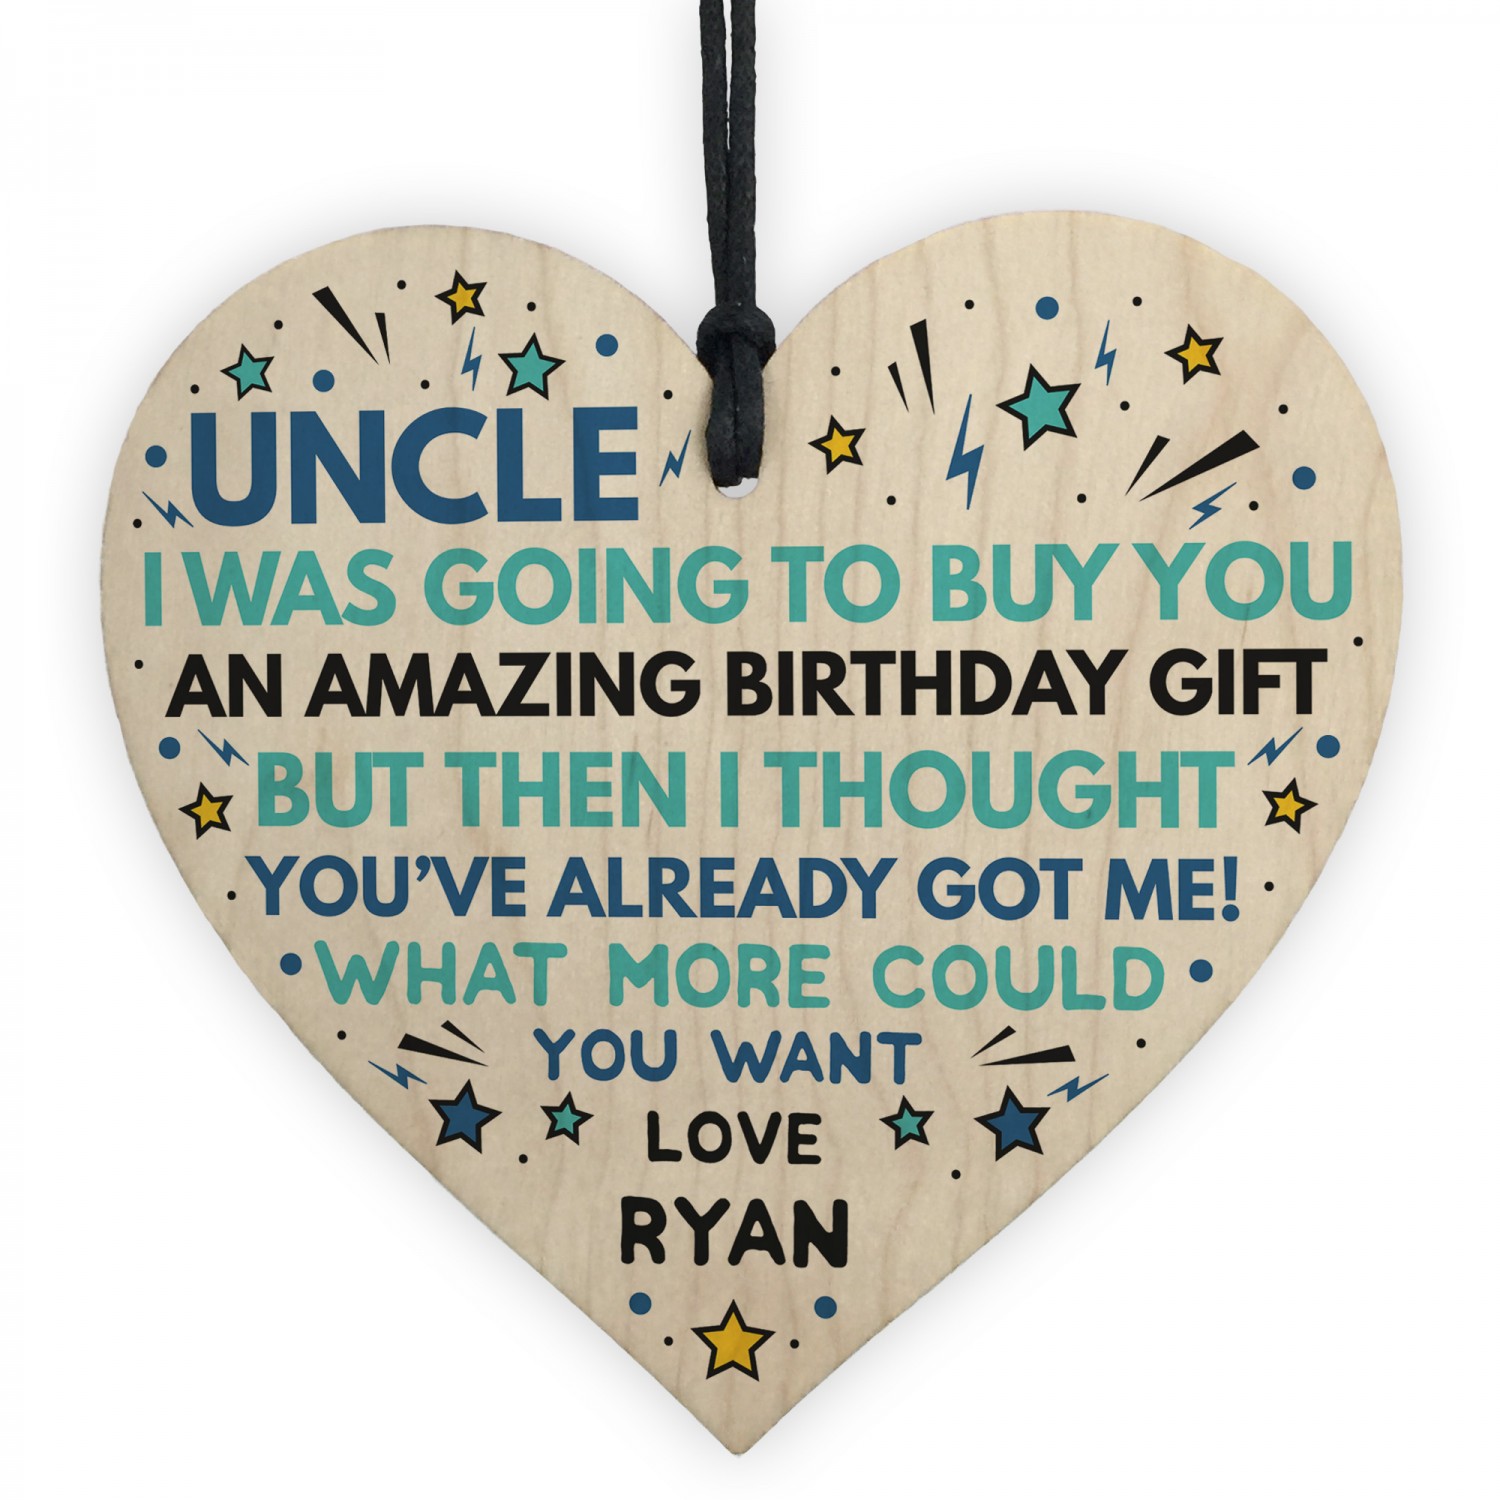 5 Amazing Surprise Birthday Gift Ideas! - INSCMagazine